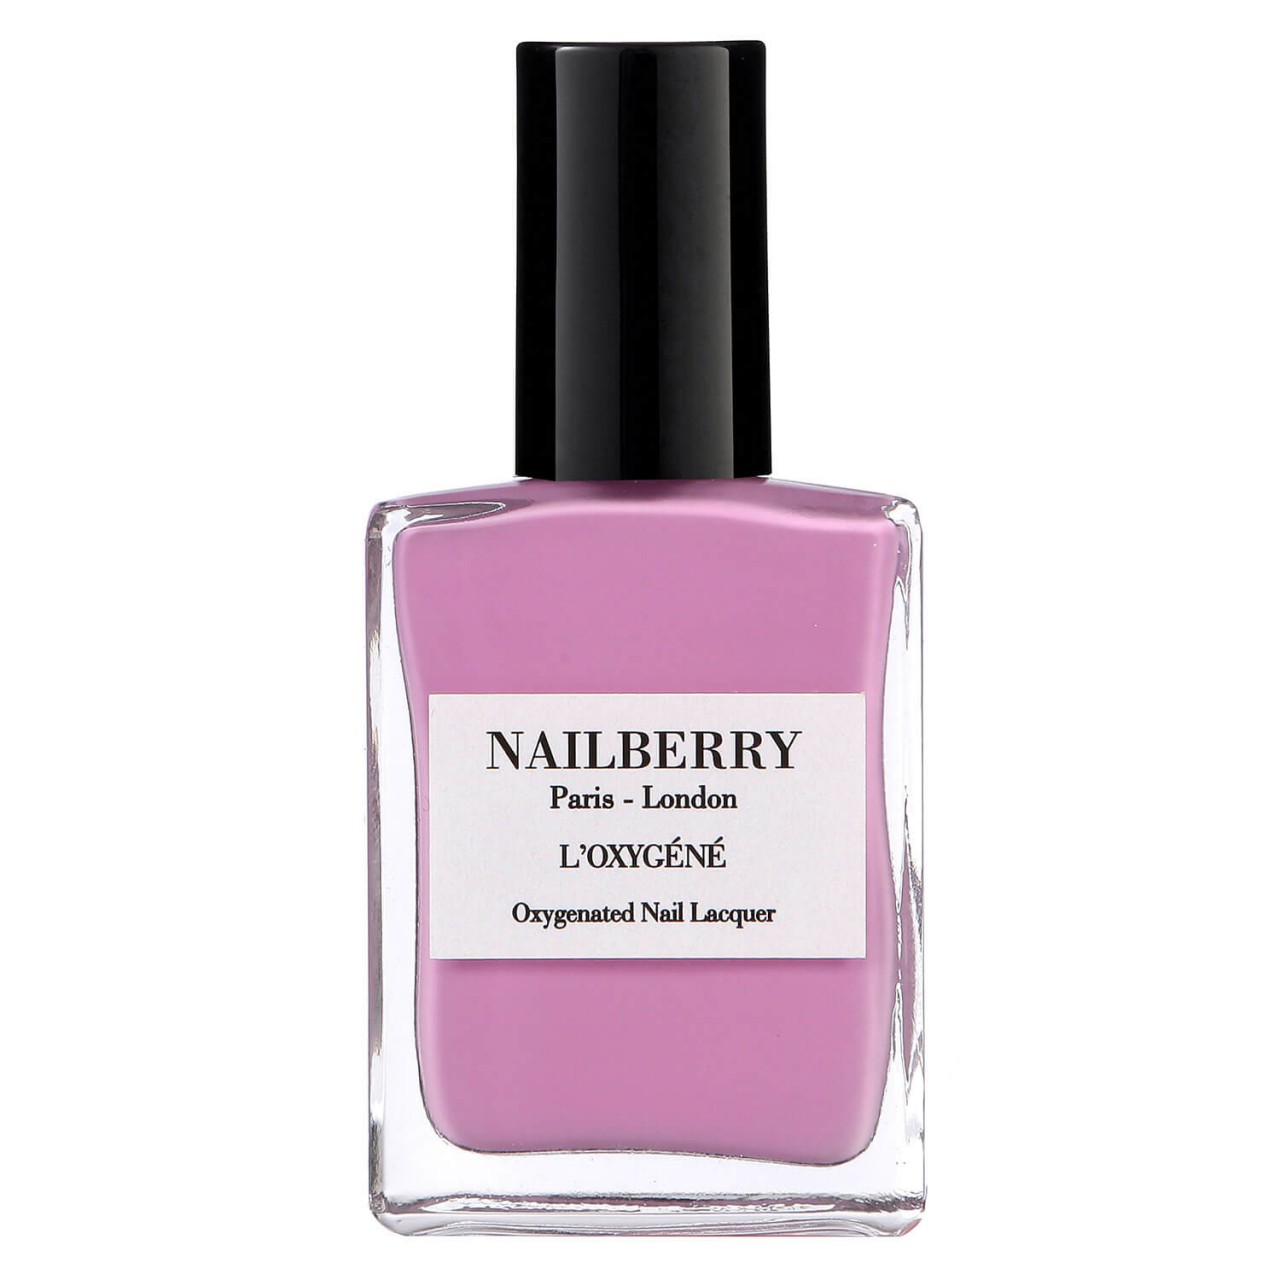 L'oxygéné - Lilac Fairy von Nailberry